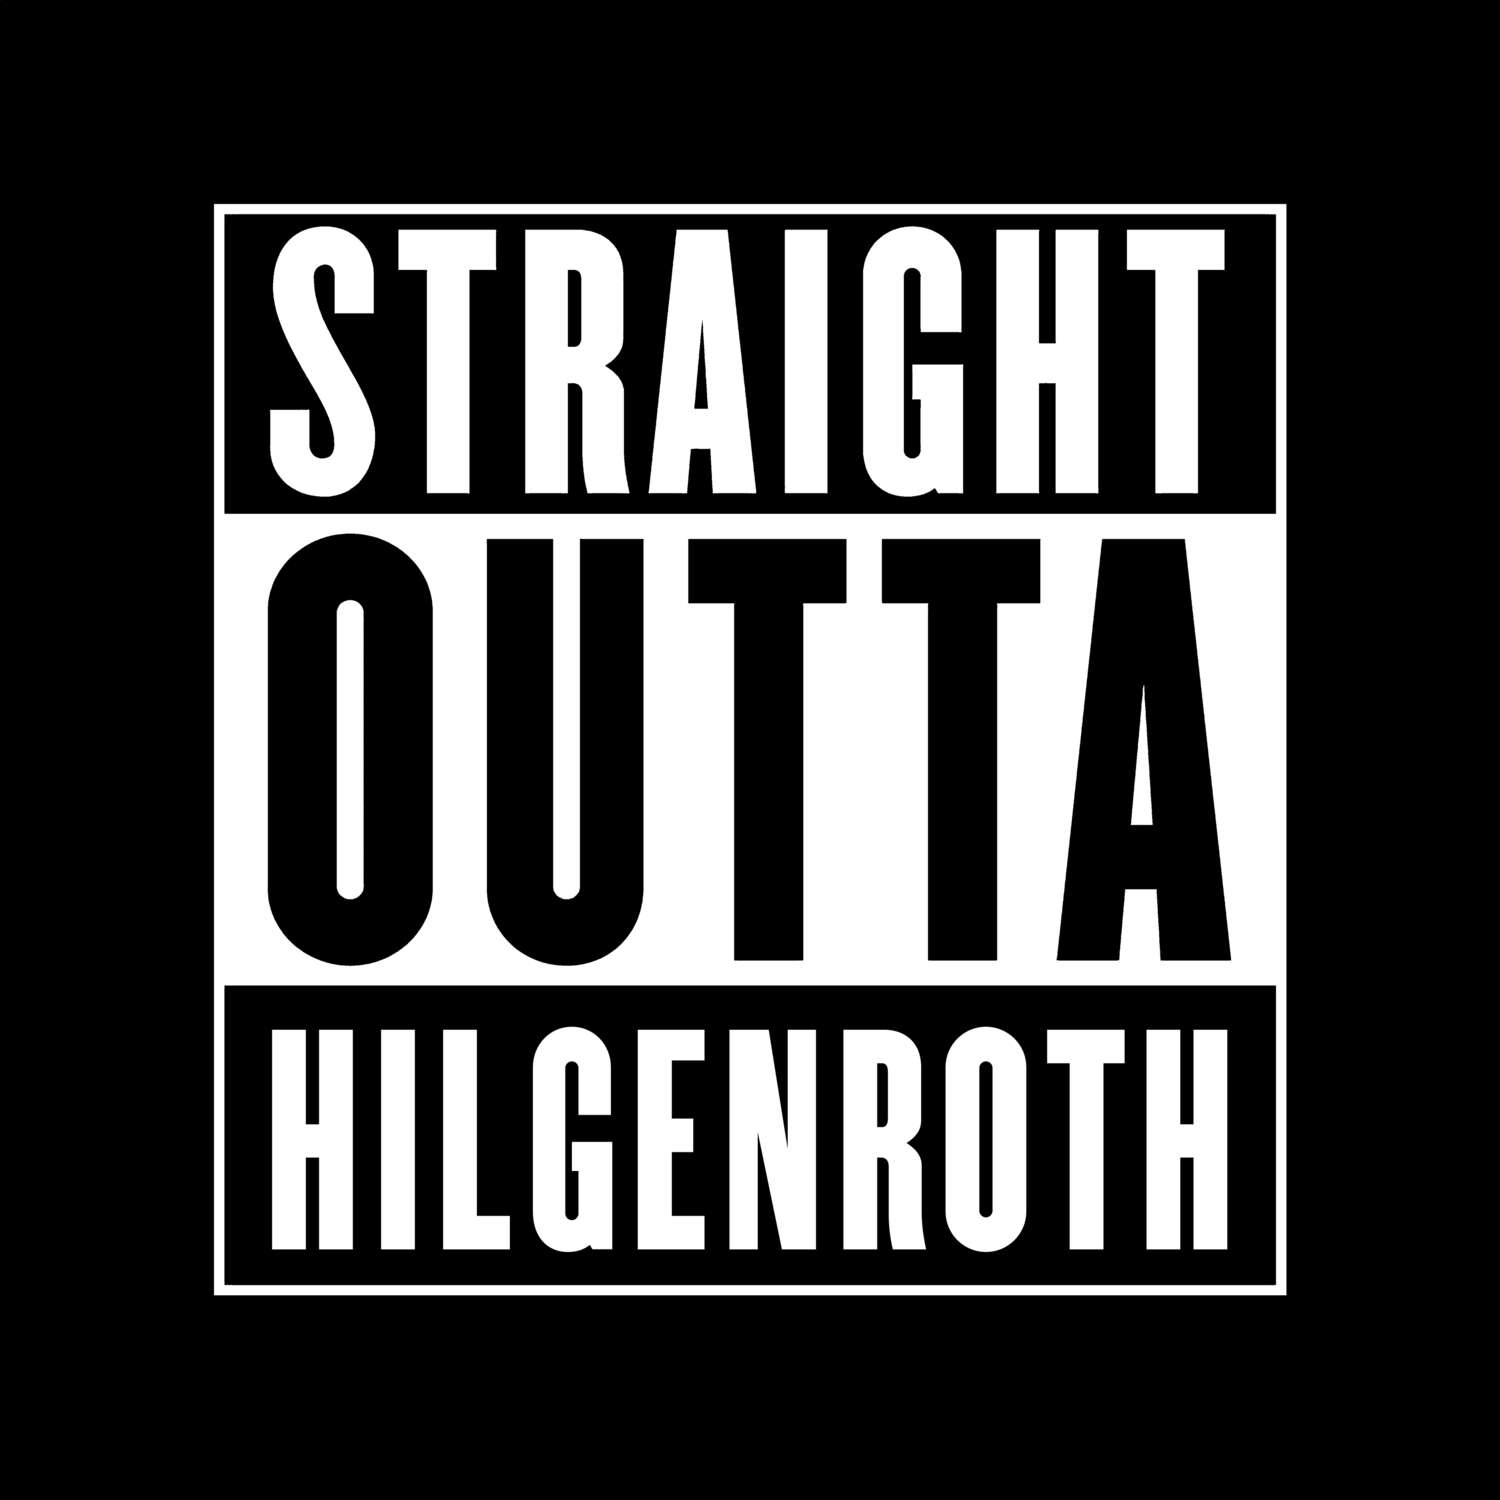 Hilgenroth T-Shirt »Straight Outta«